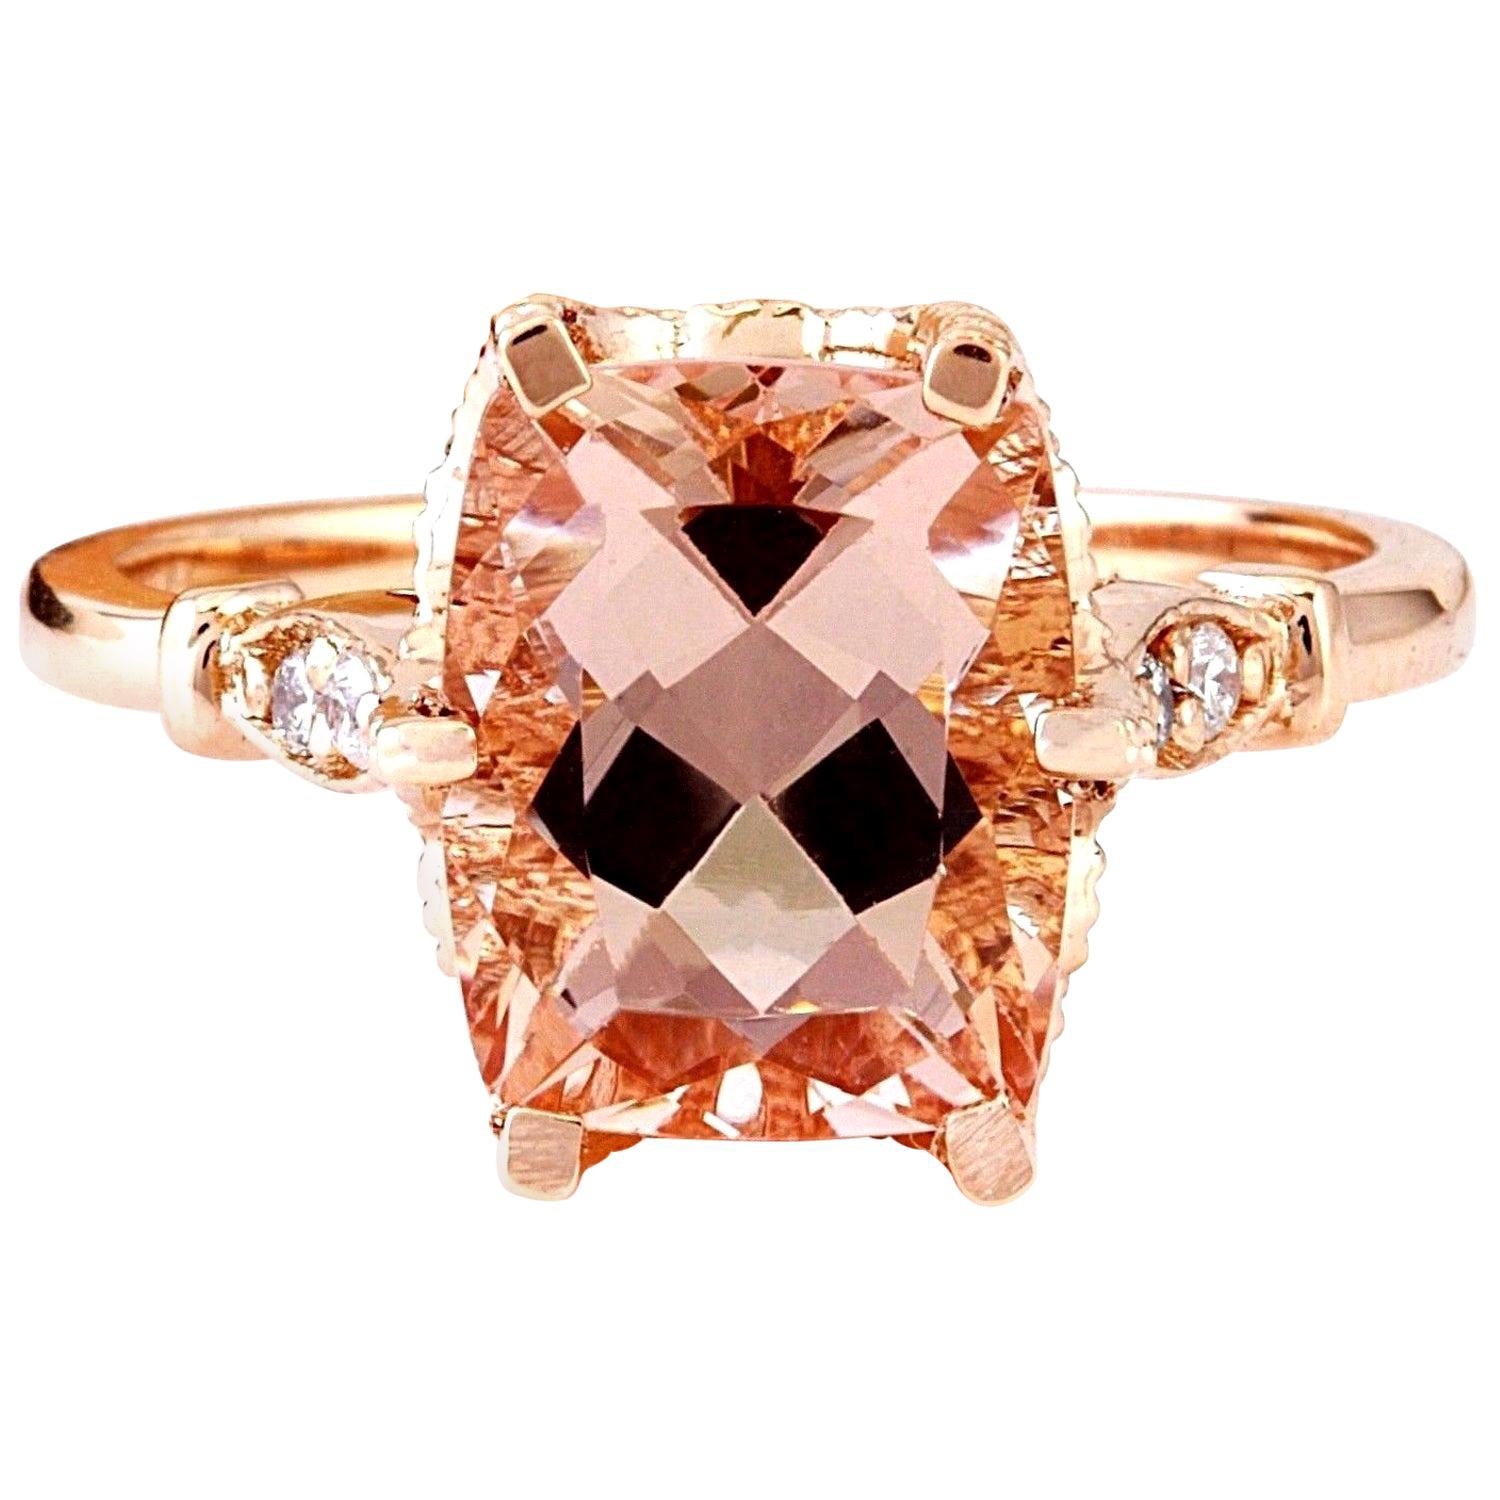 Exquisite Natural Morganite Diamond Ring In 14 Karat Solid Rose Gold 